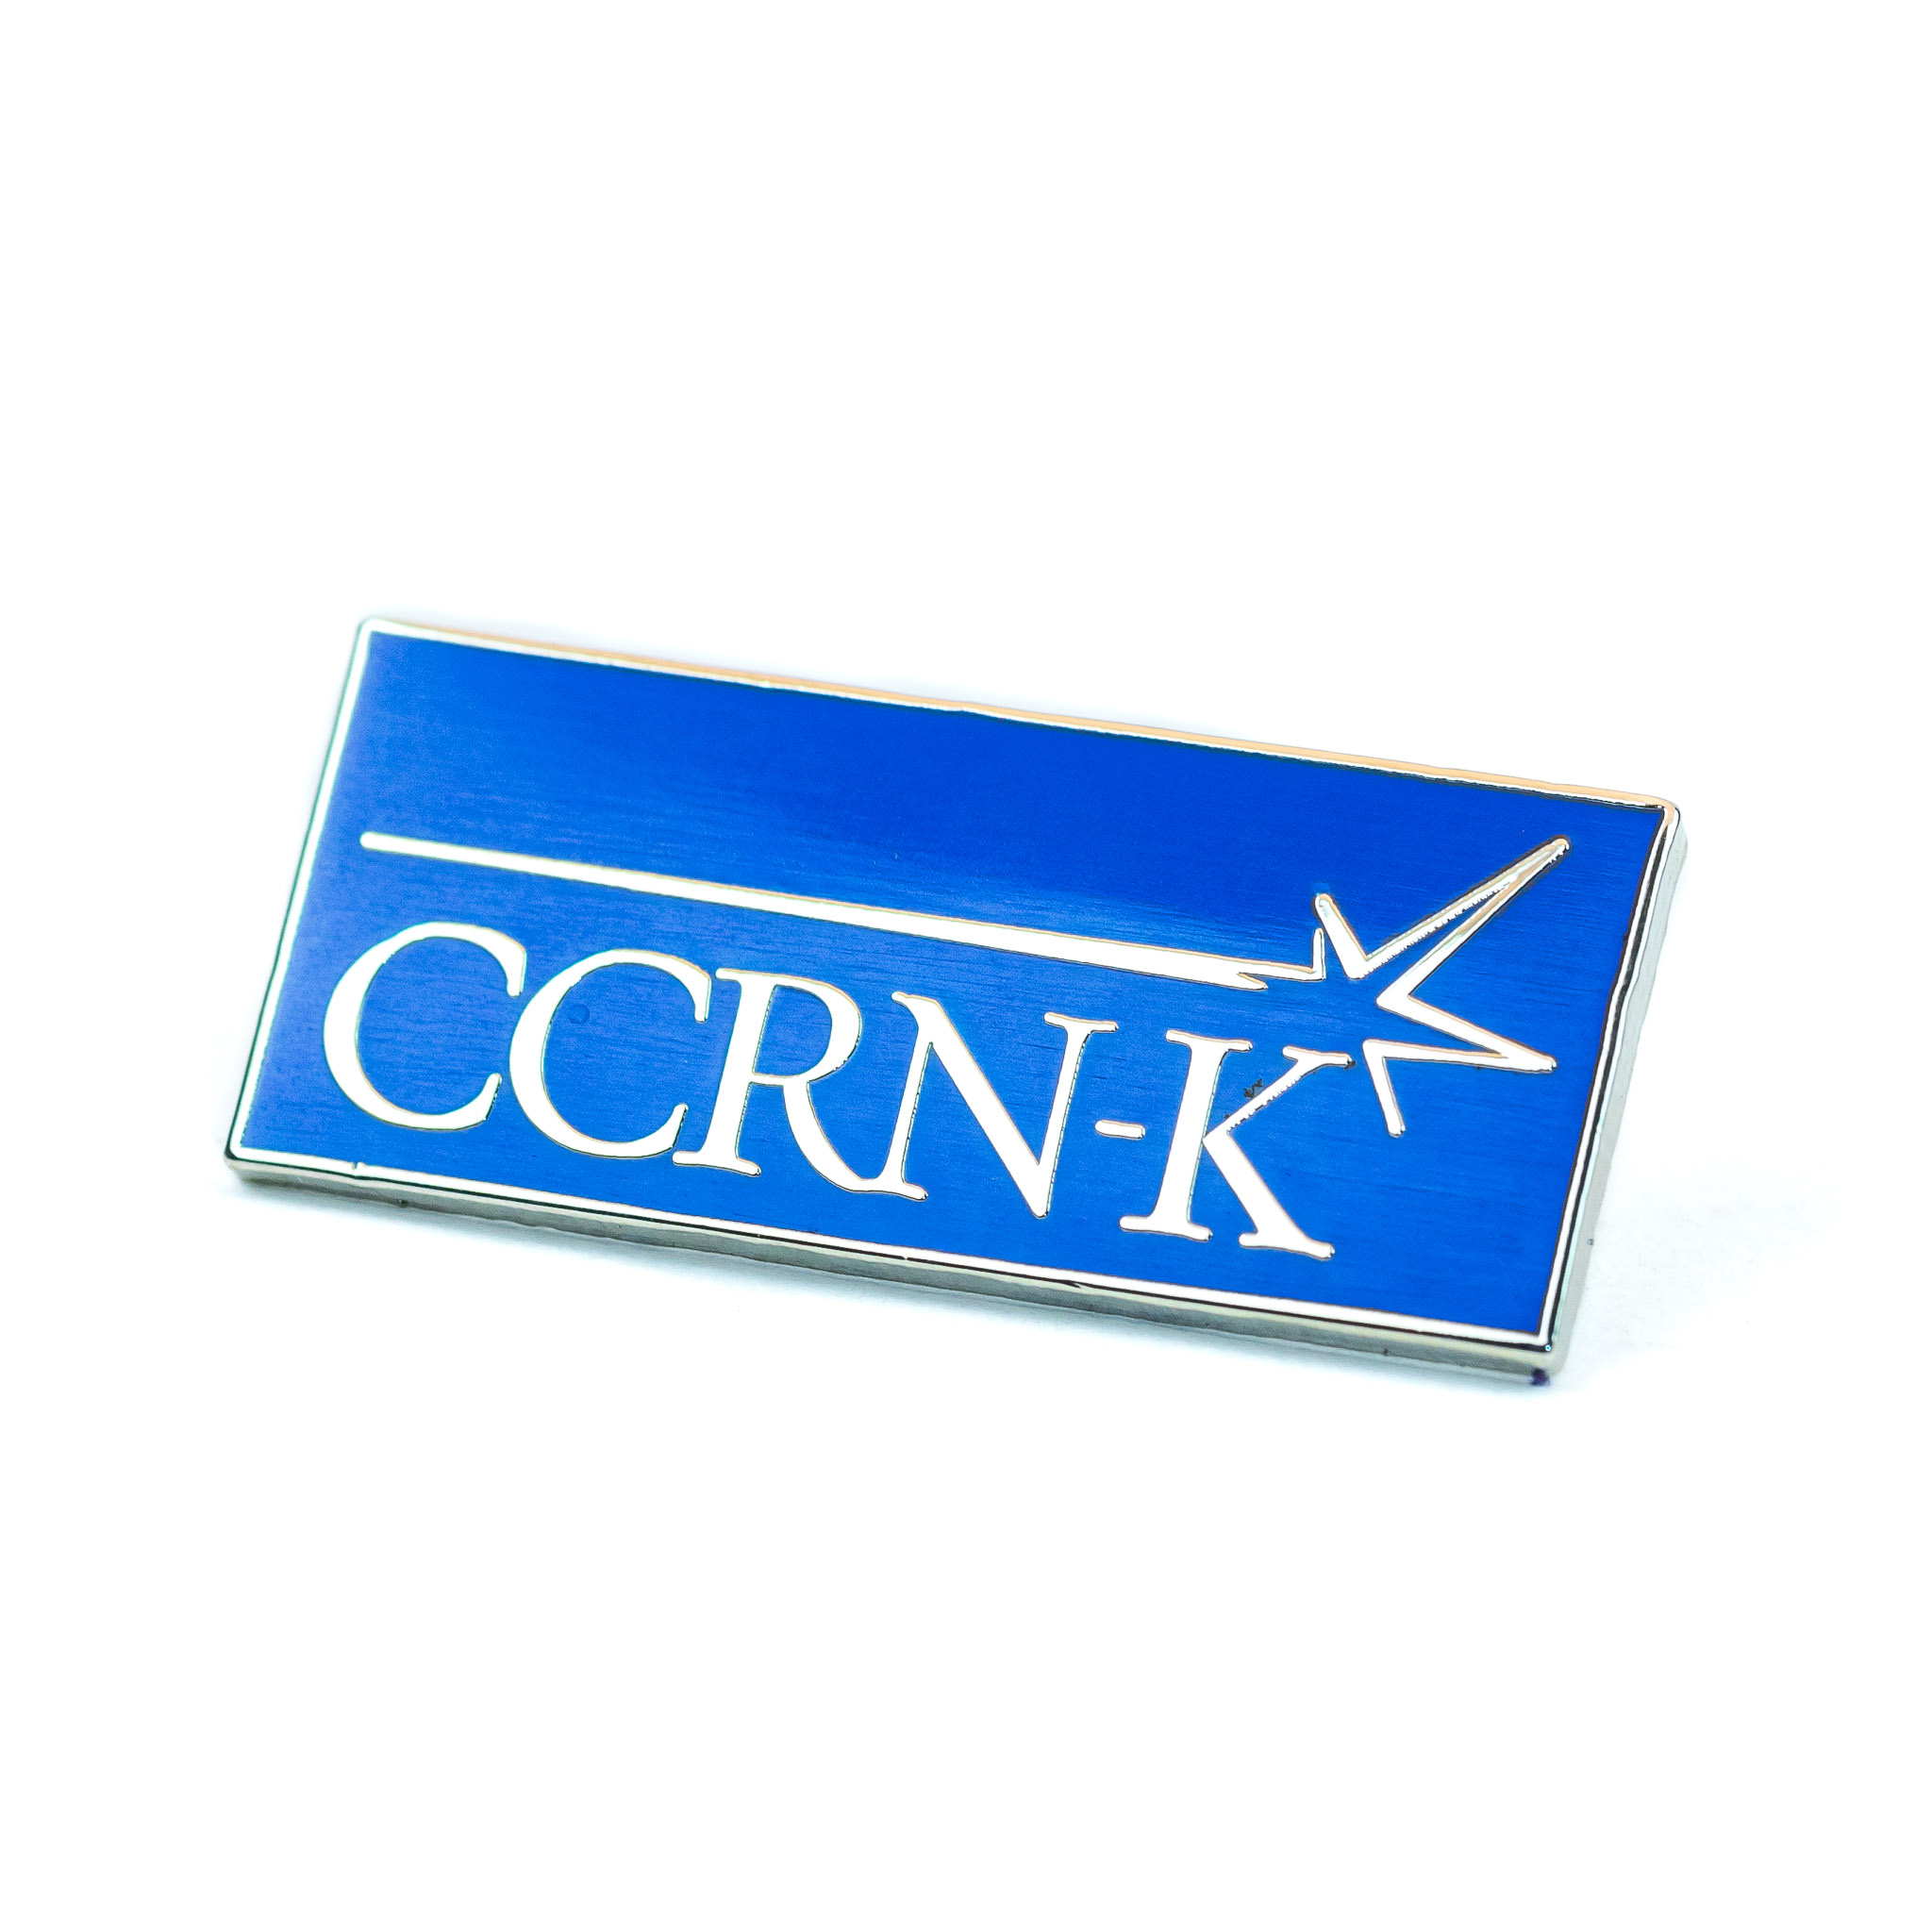 CCRN-K Lapel Pin